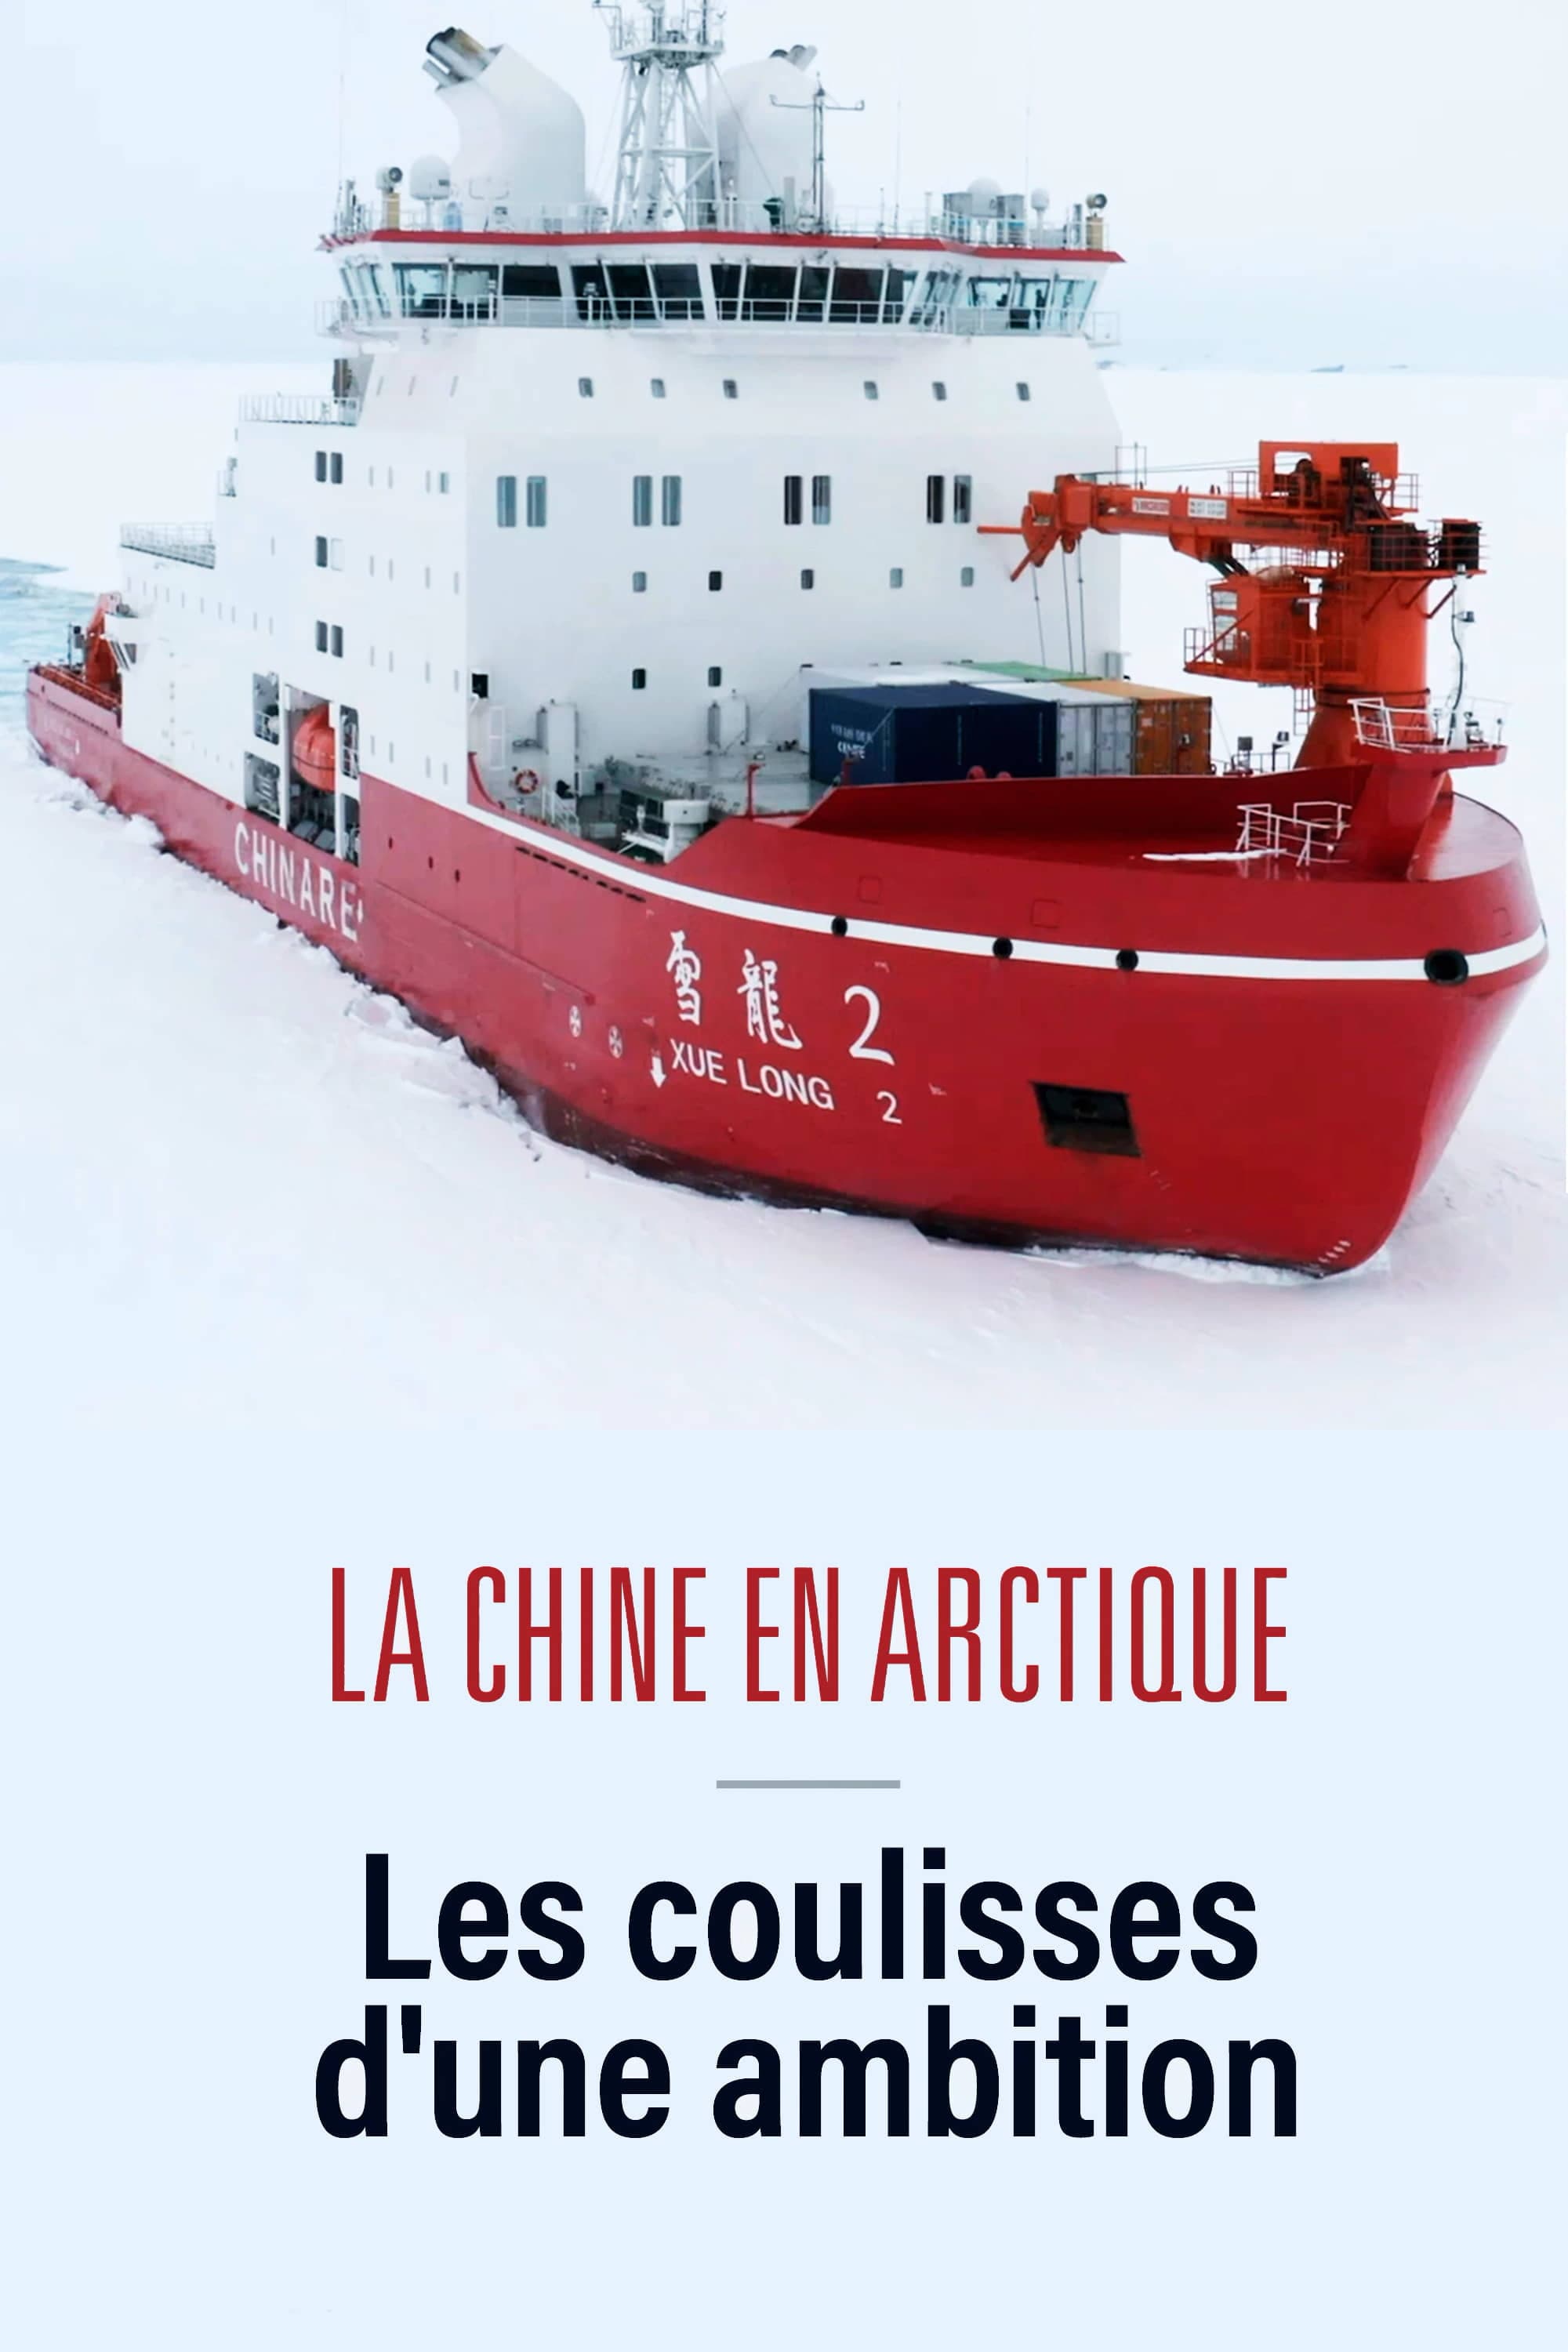 The Rising of China Arctic